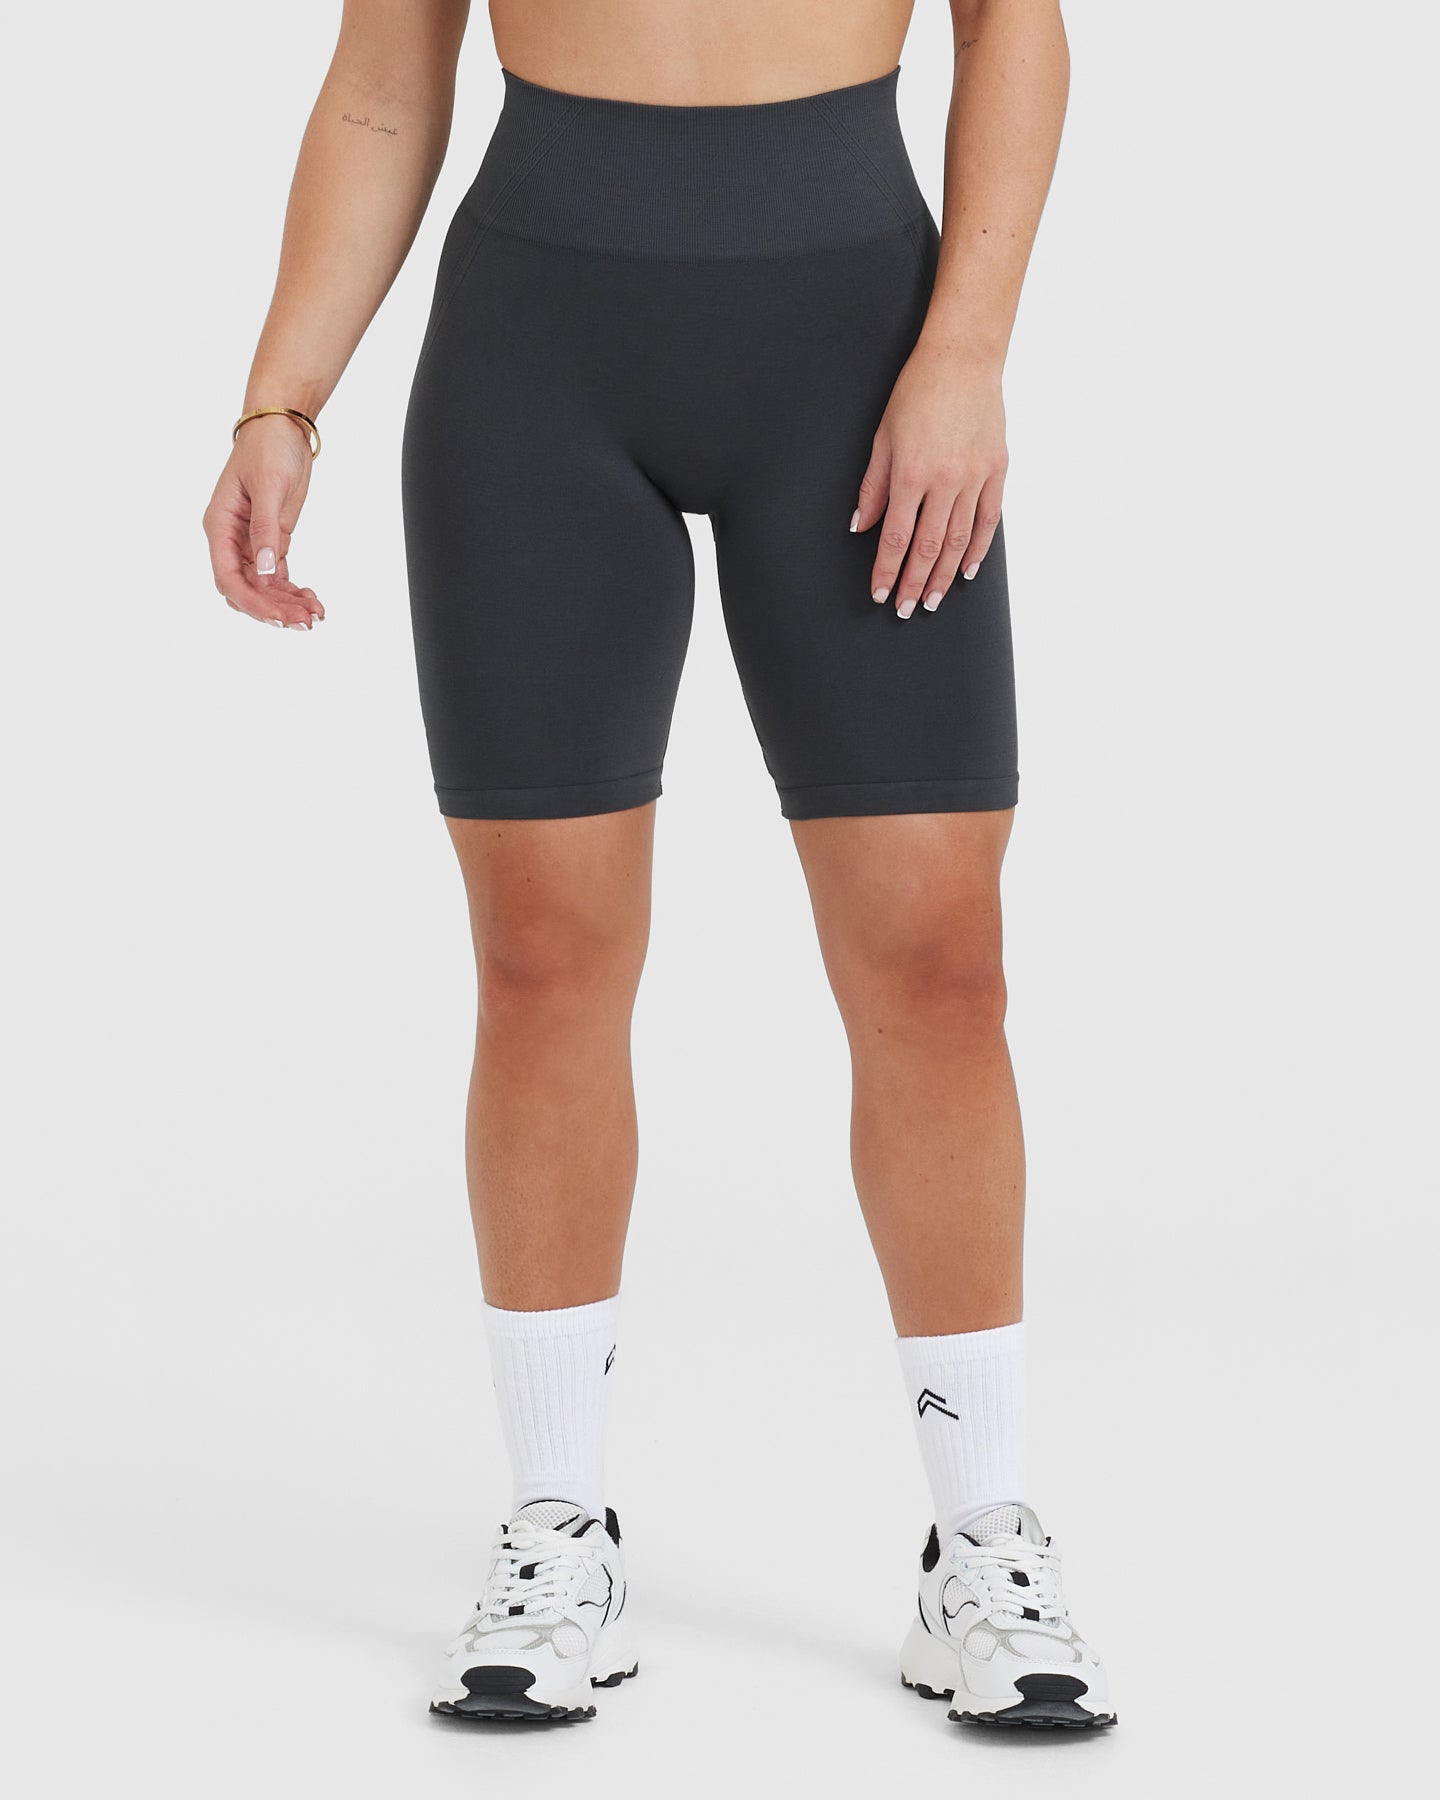 Lightweight Biker Shorts for Women - Coal | Oner Active US